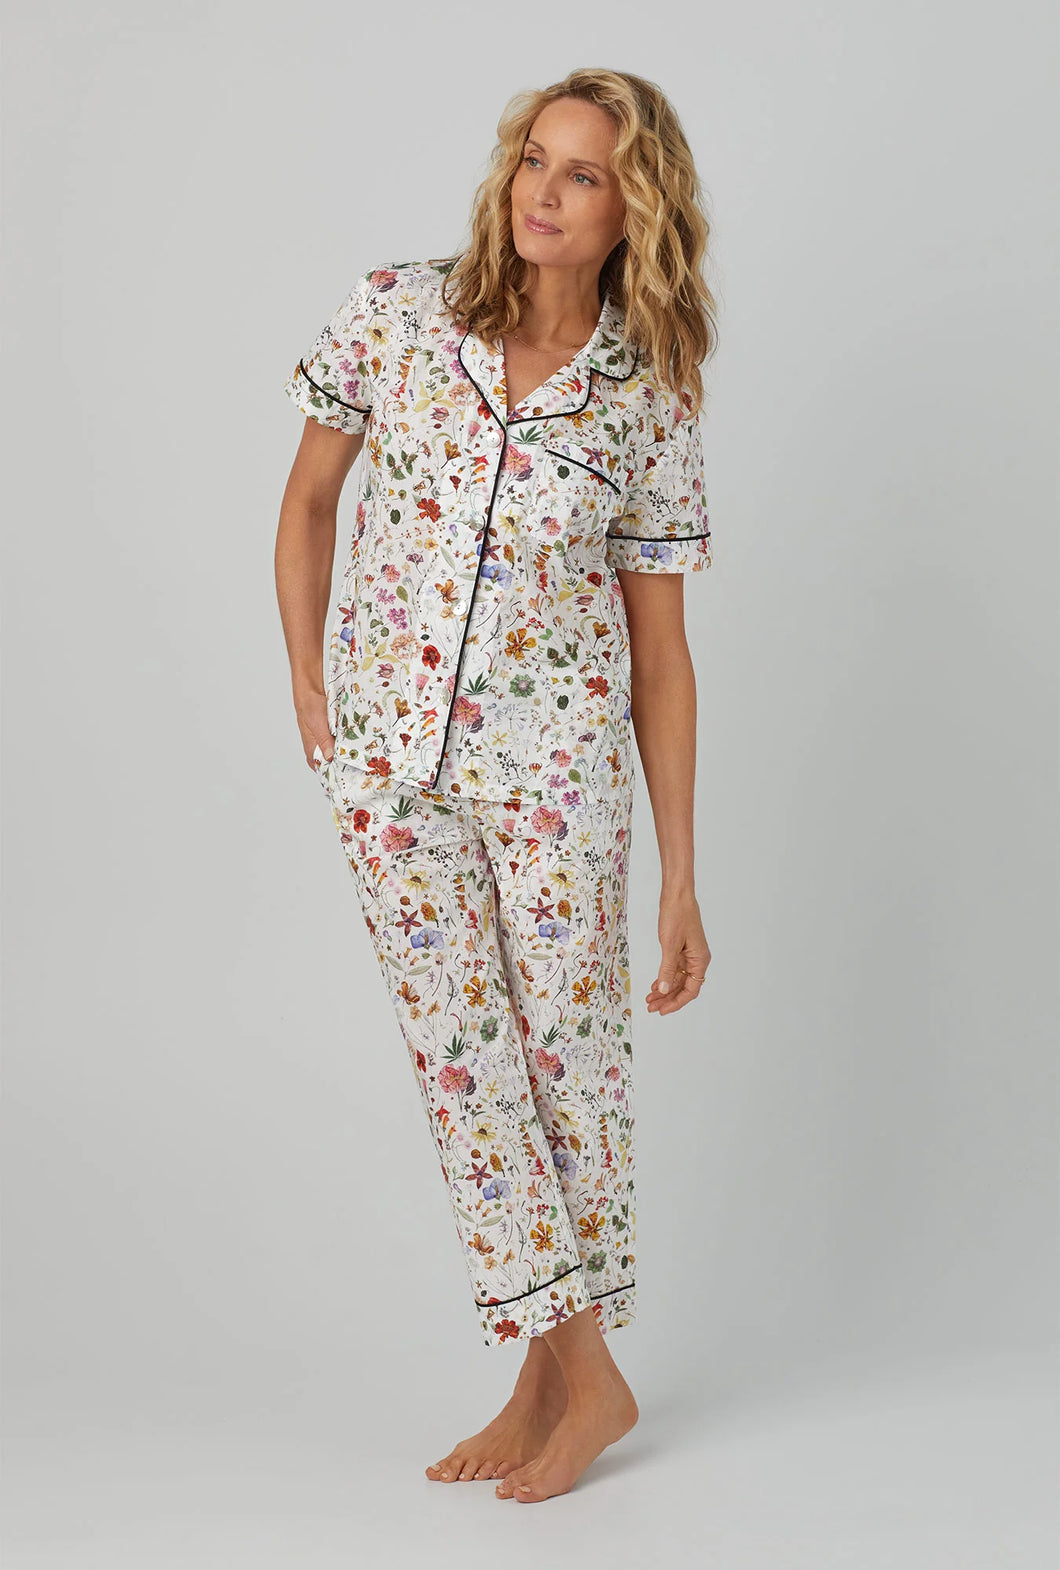 Bedhead Floral Eve Short Sleeve Woven Cotton PJ Set